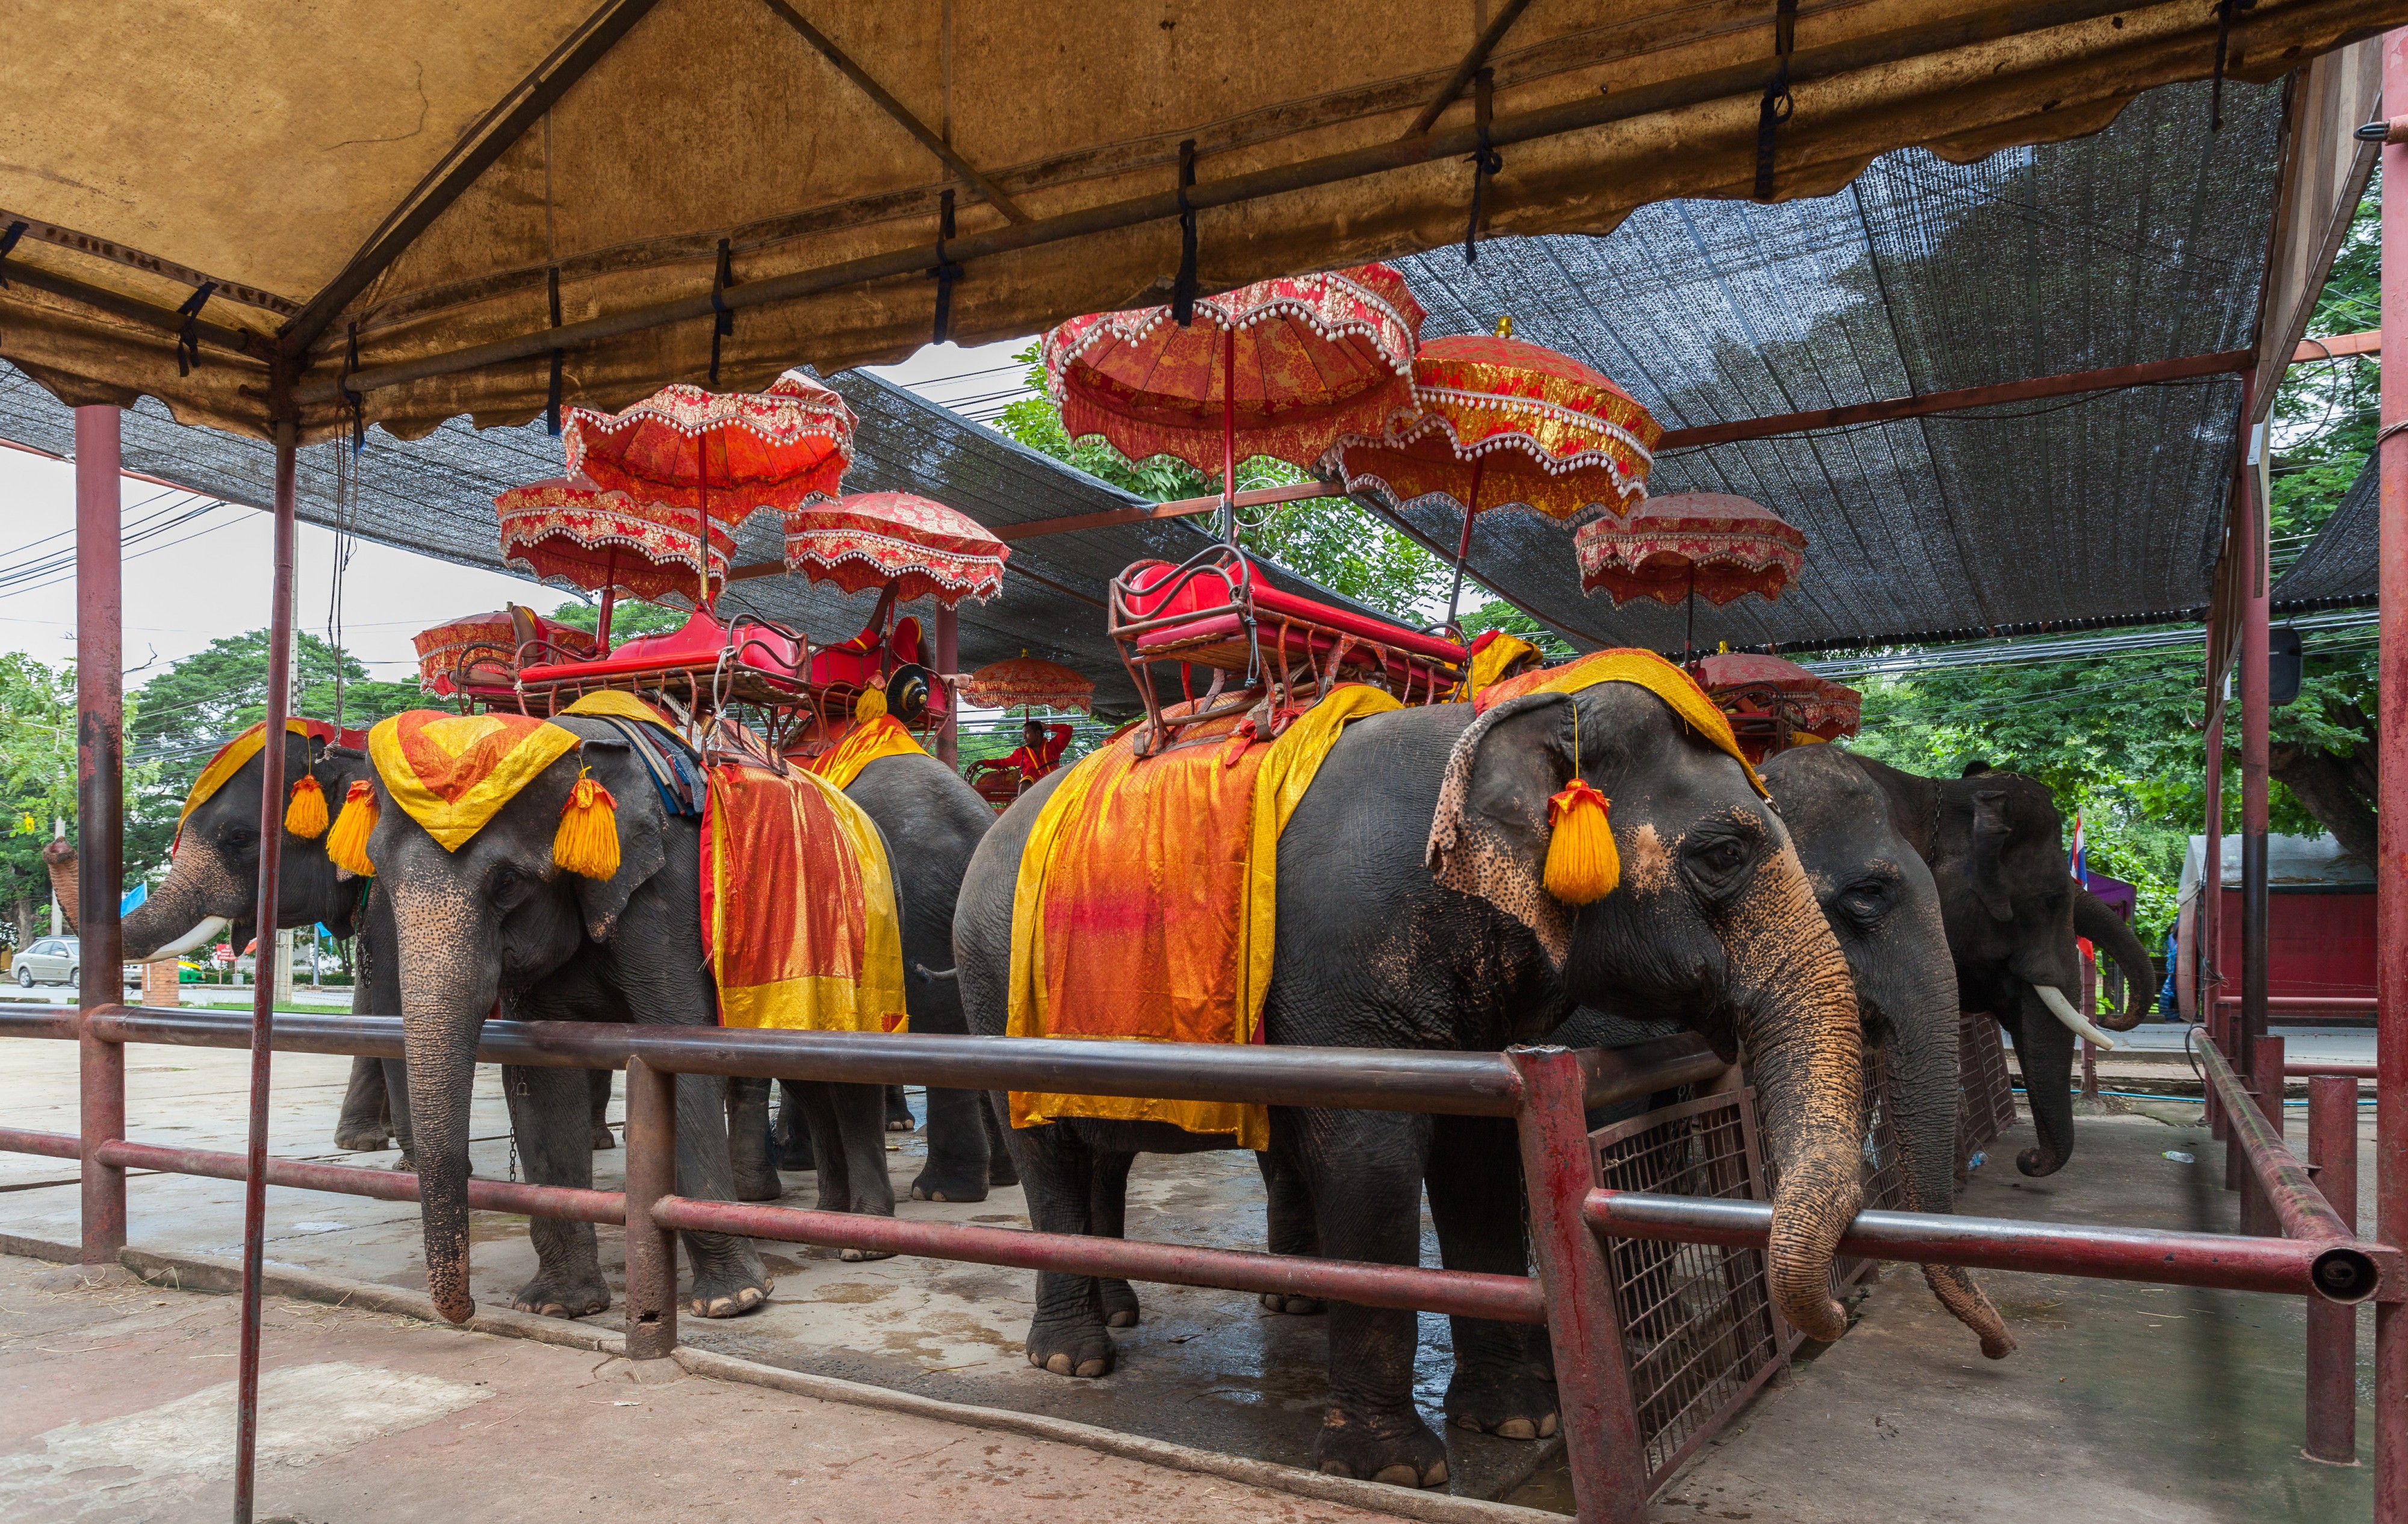 Elefantes, Ayutthaya, Tailandia, 2013-08-23, DD 10